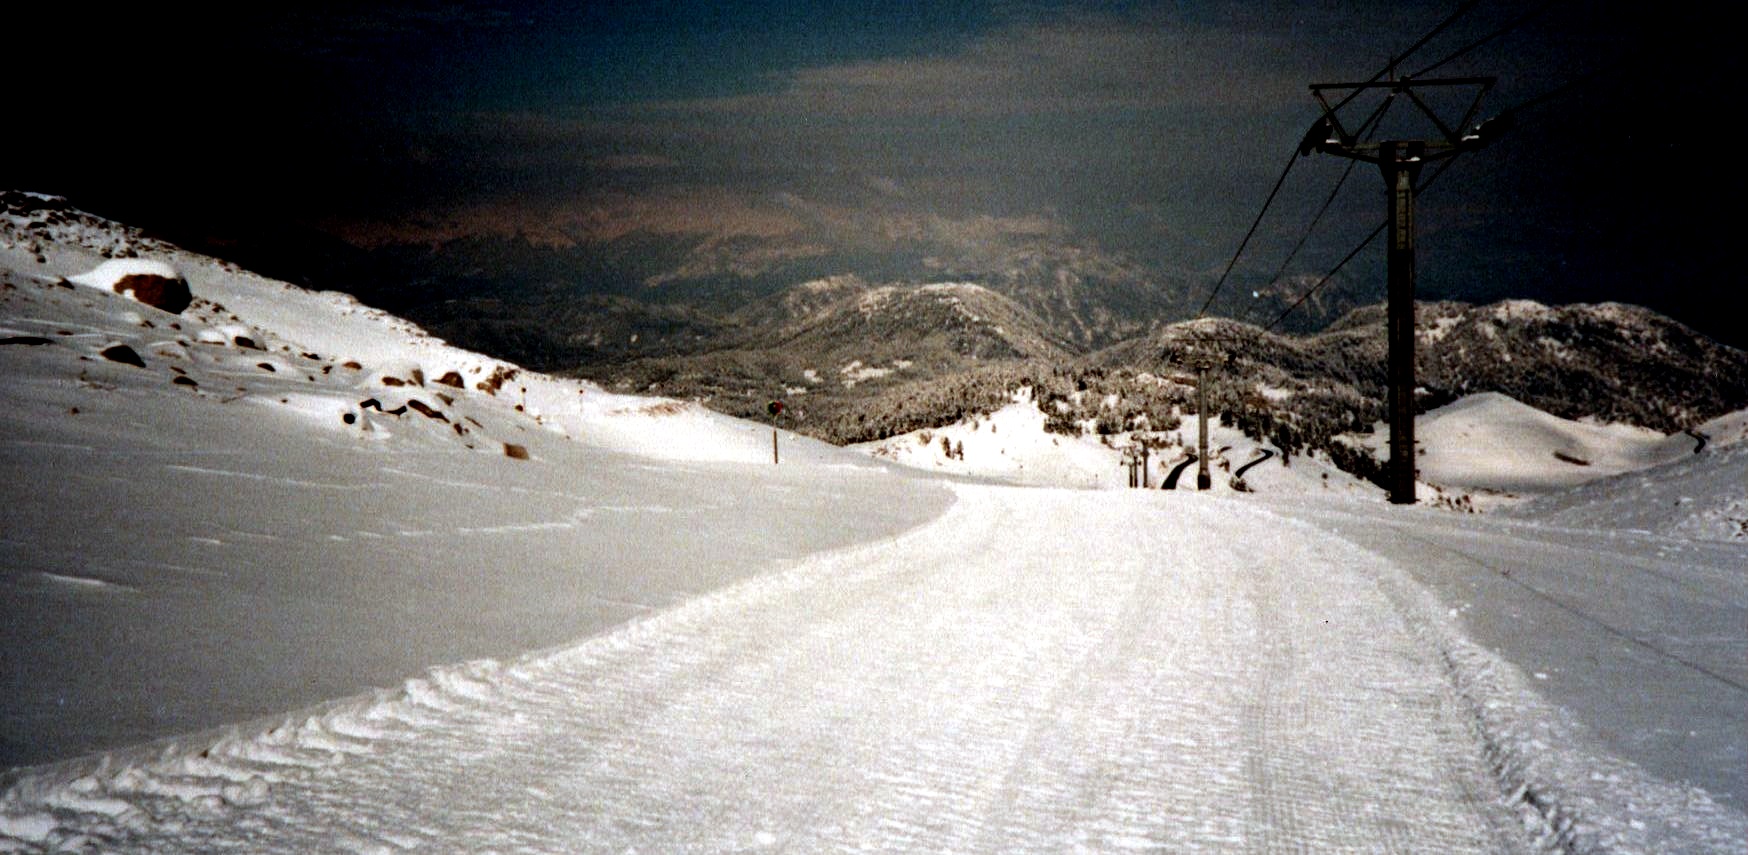 Ski Lifts and Ski Slopes on Mount Parnassus in Greece